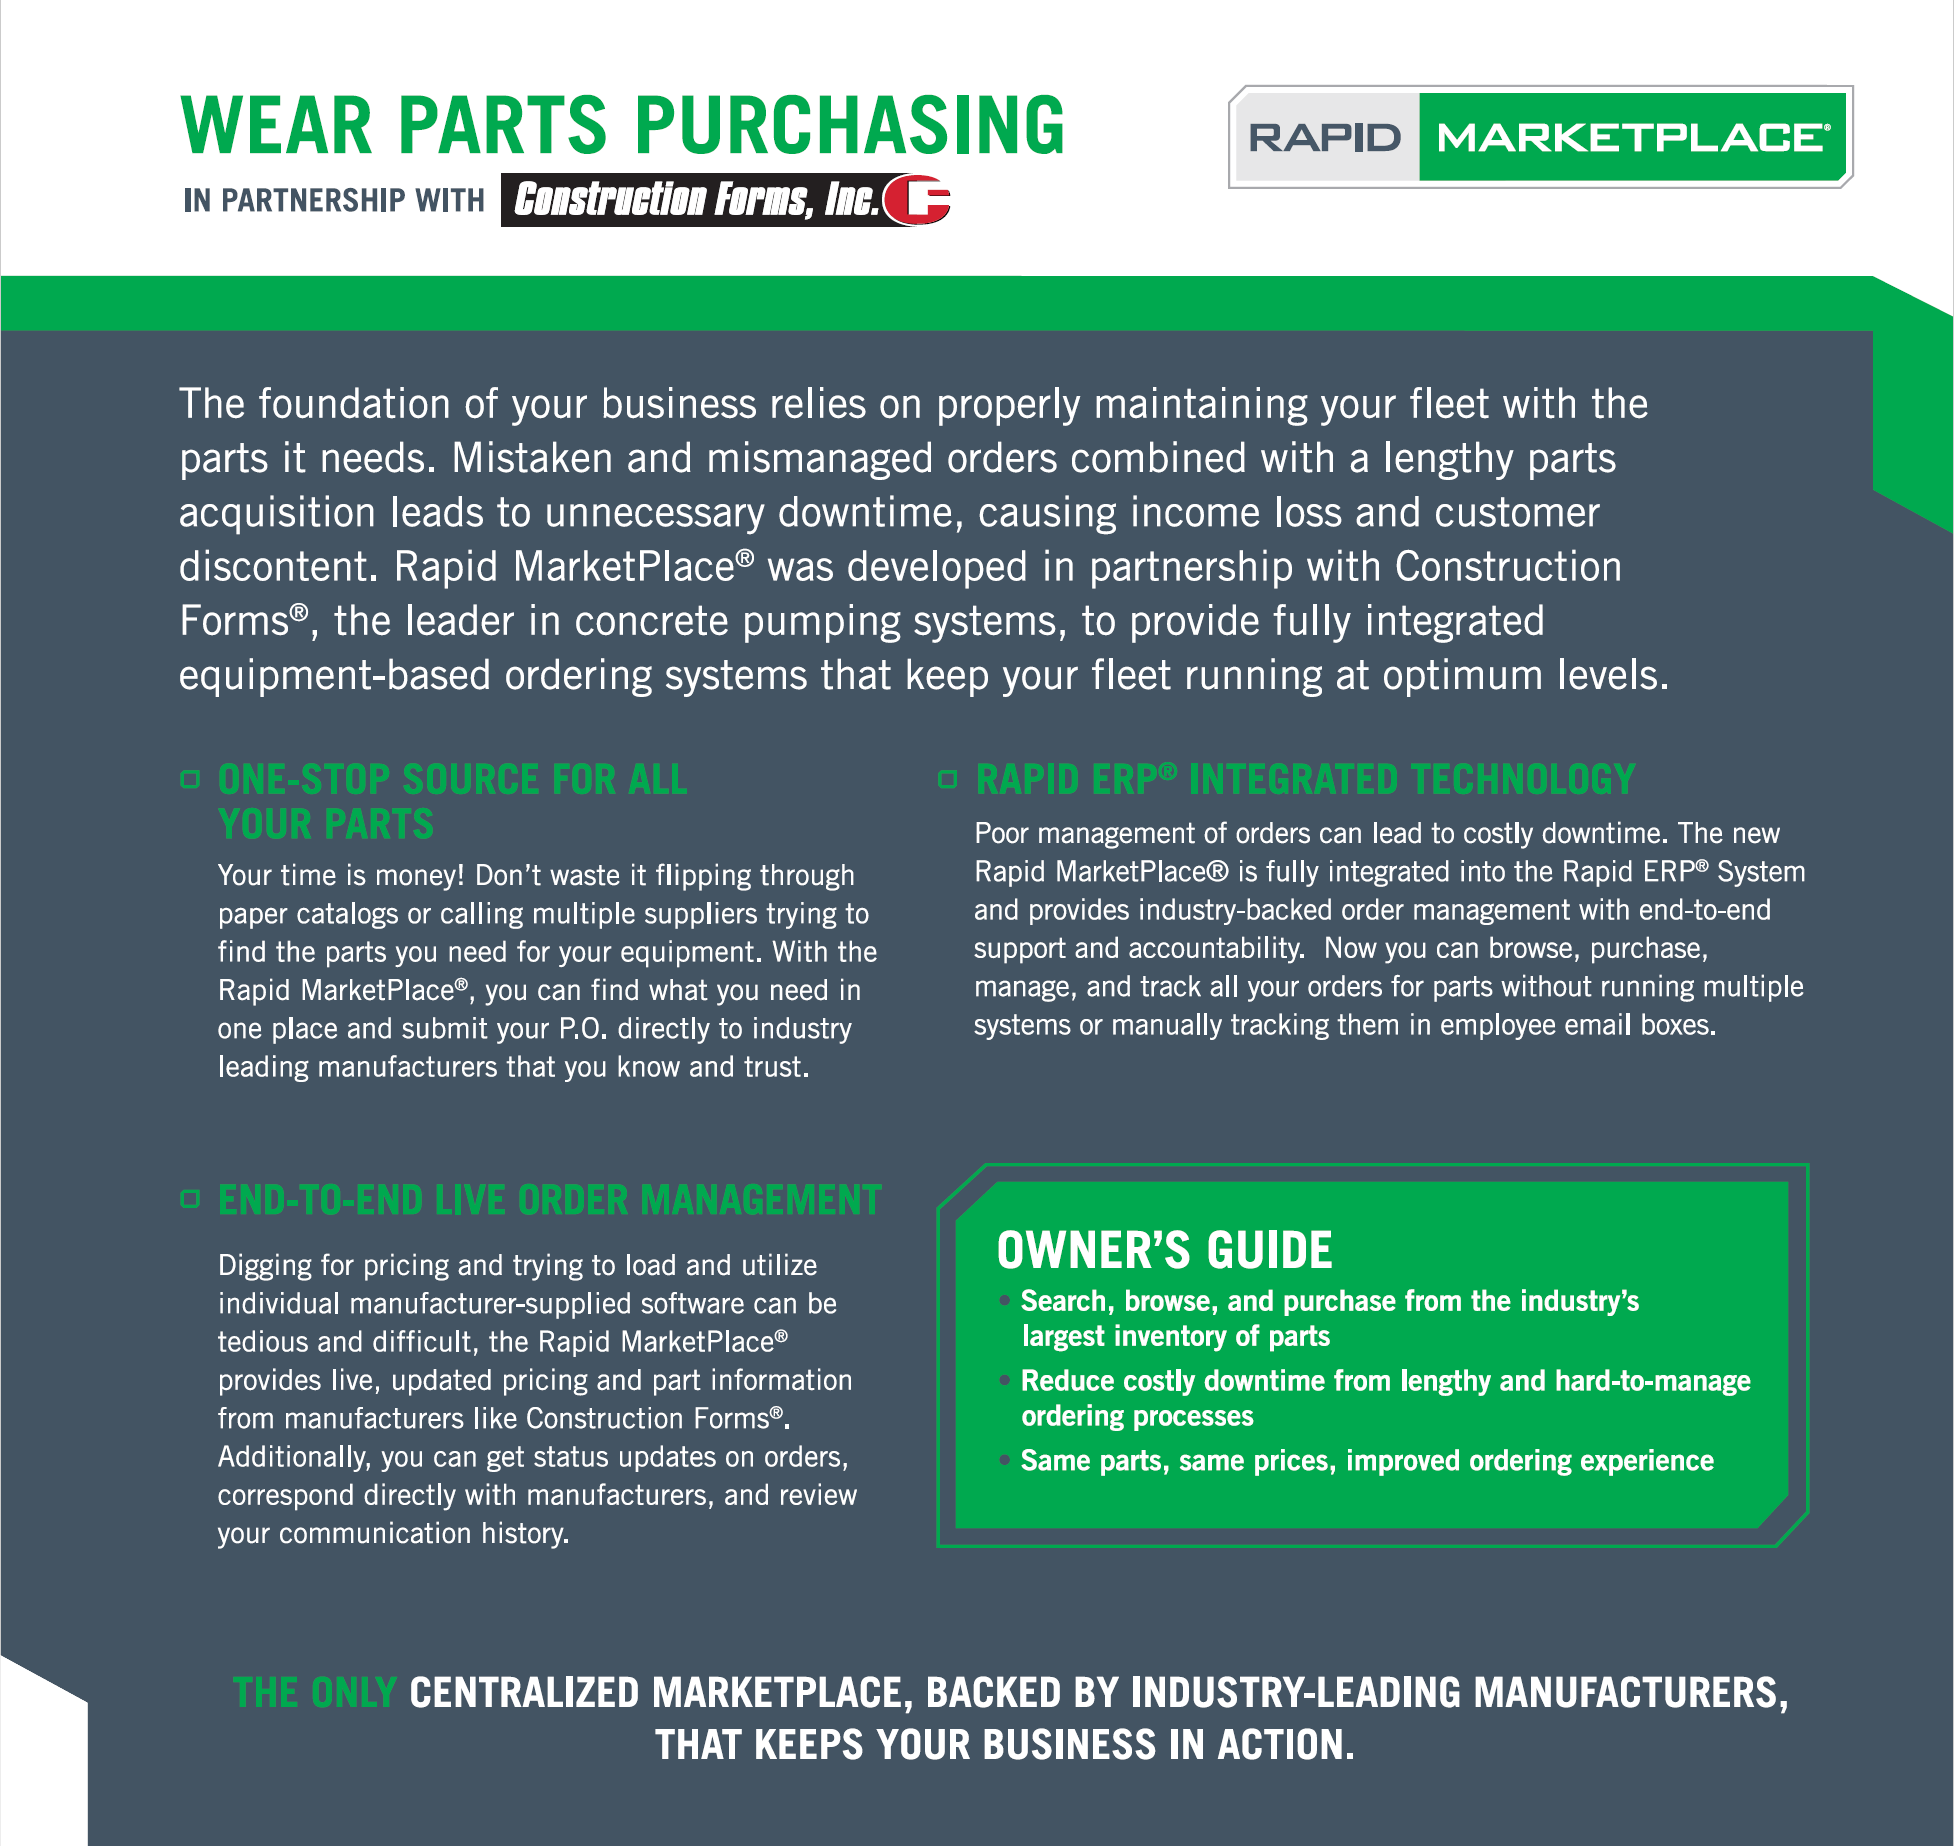 Rapid Marketplace - Wear Parts Purchasing